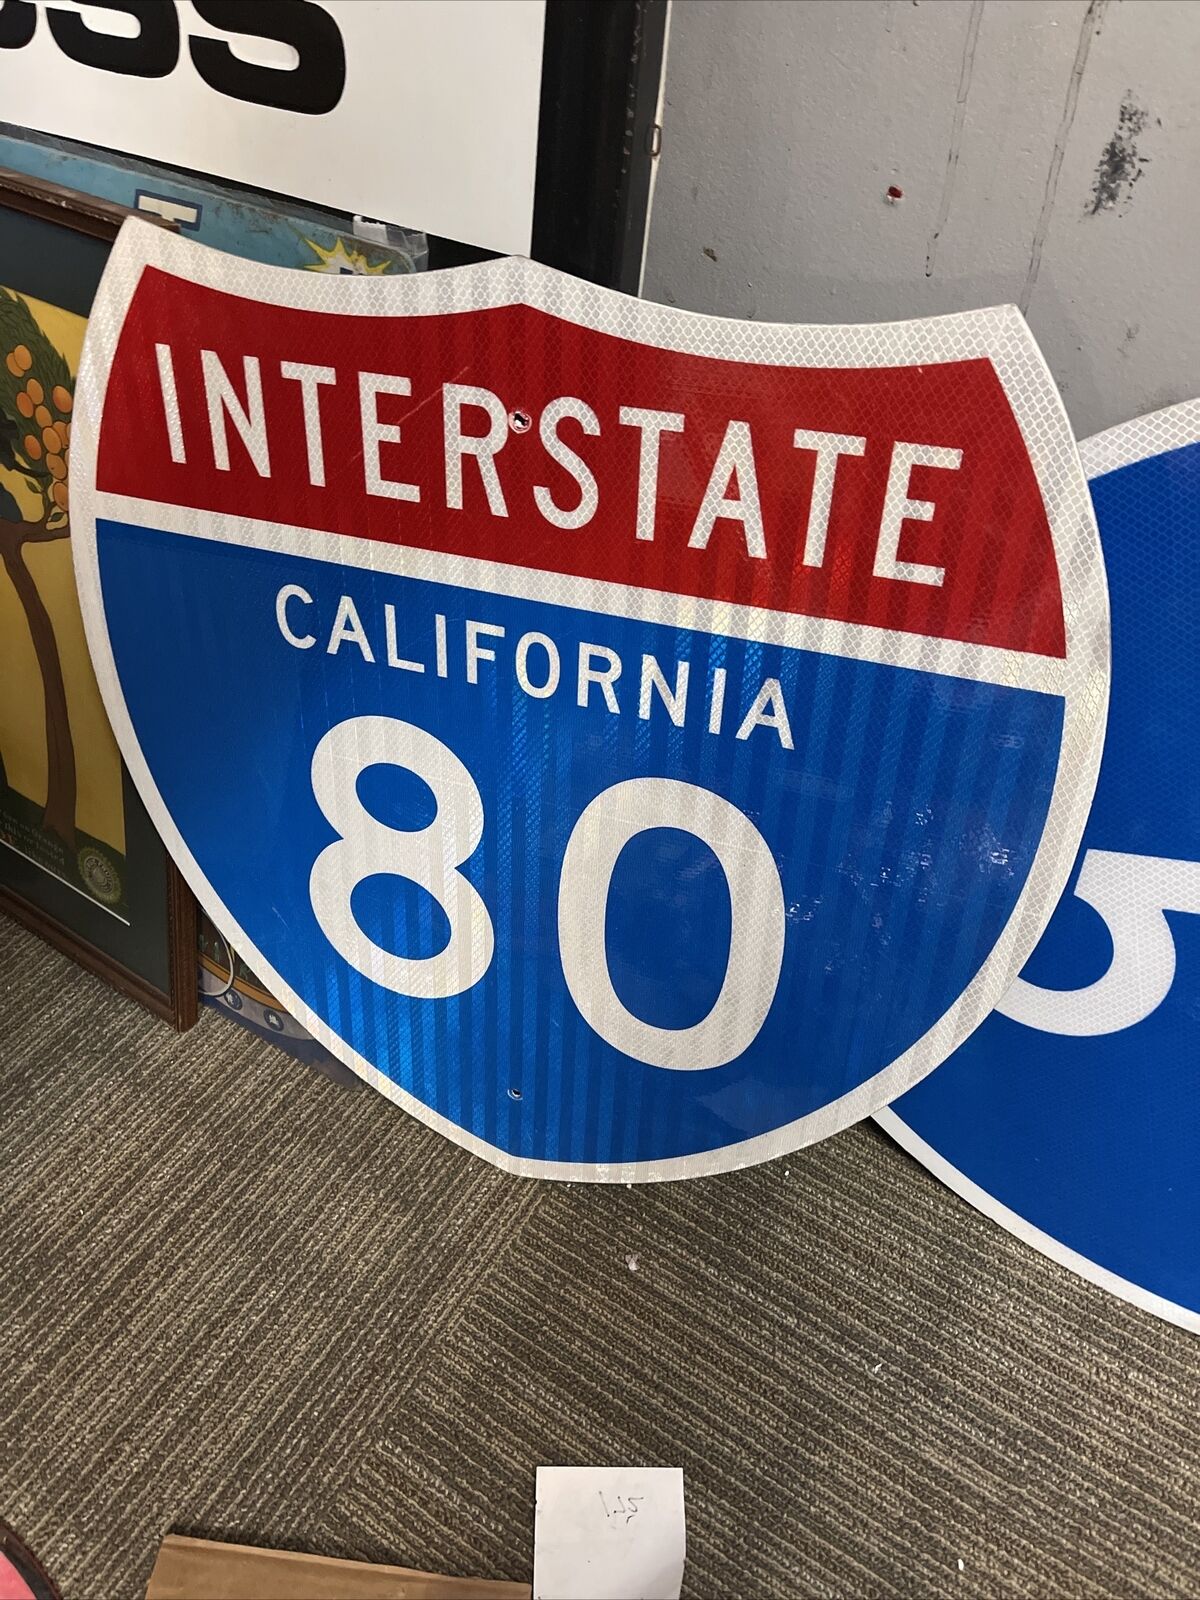 CALIFORNIA Interstate 80 Reflective California 24” X 24 Shield New Old Stock